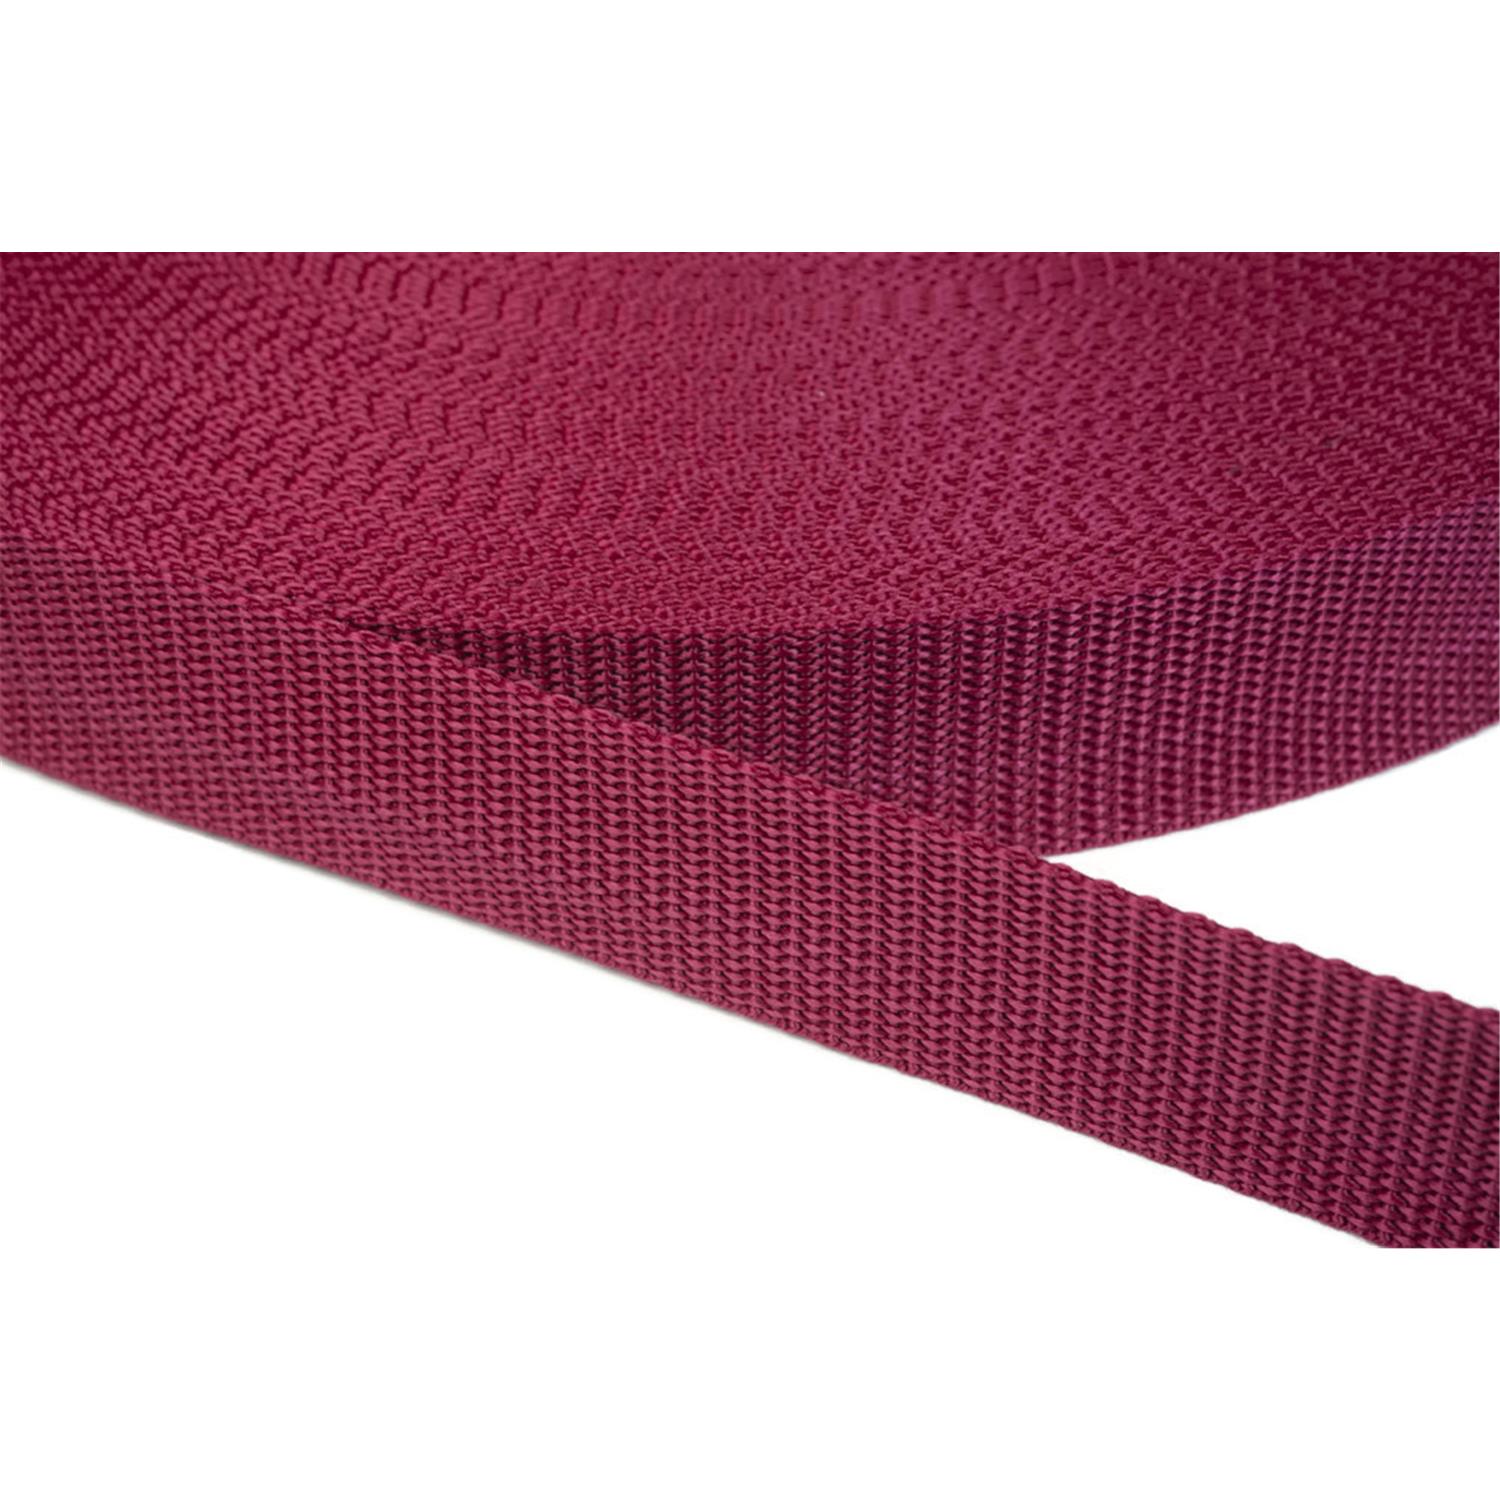 Gurtband 25mm breit aus Polypropylen in 41 Farben 21 - dunkelrot 6 Meter